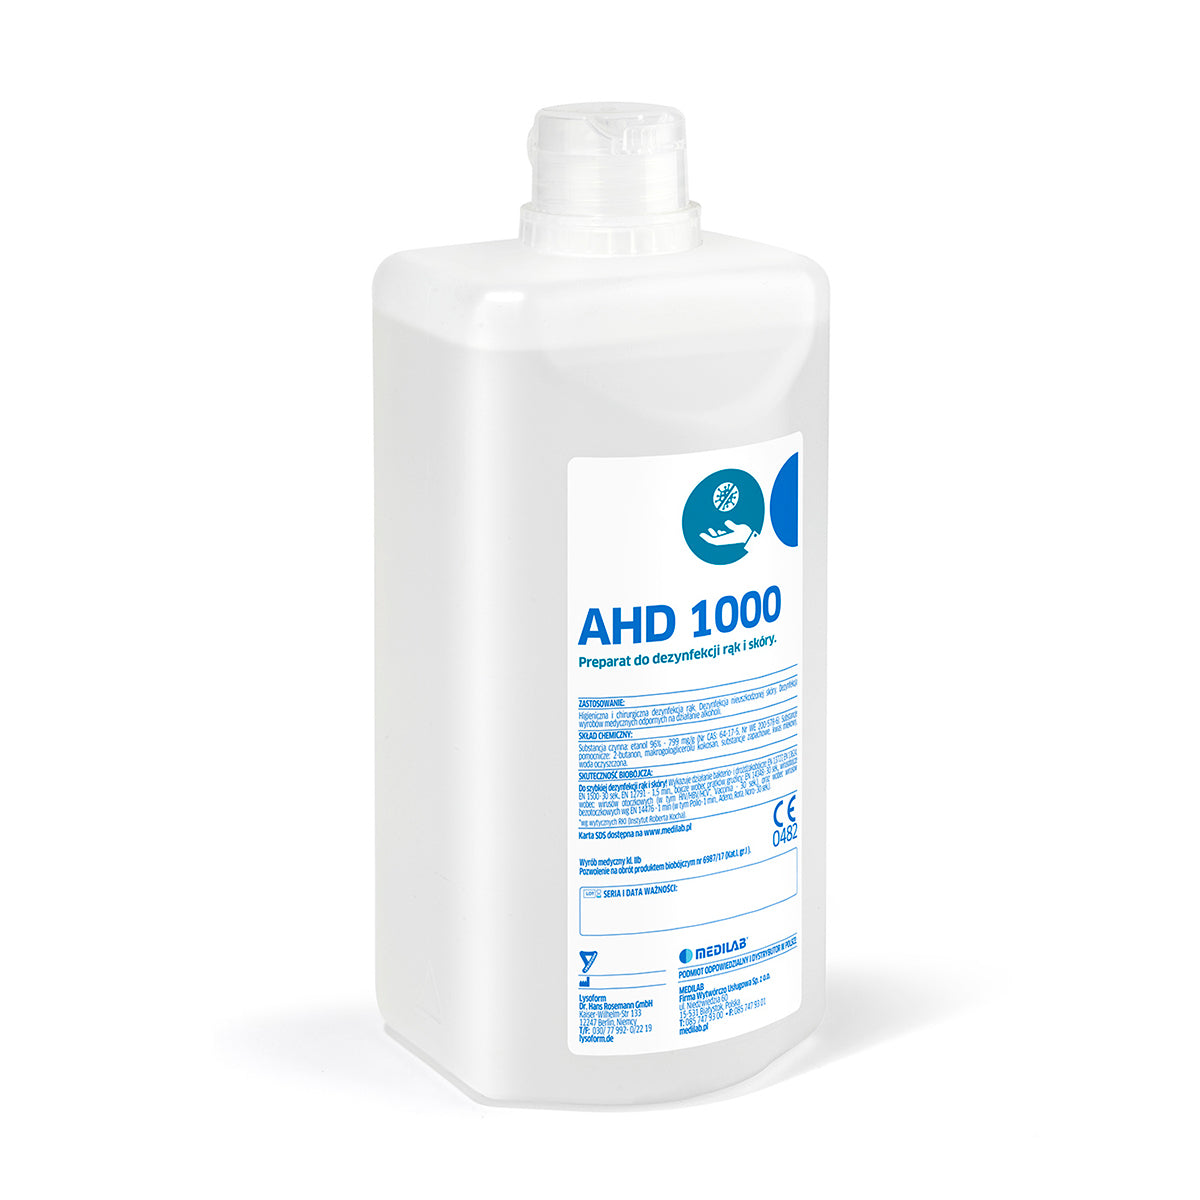 AHD 1000 liquid for disinfection, 1l